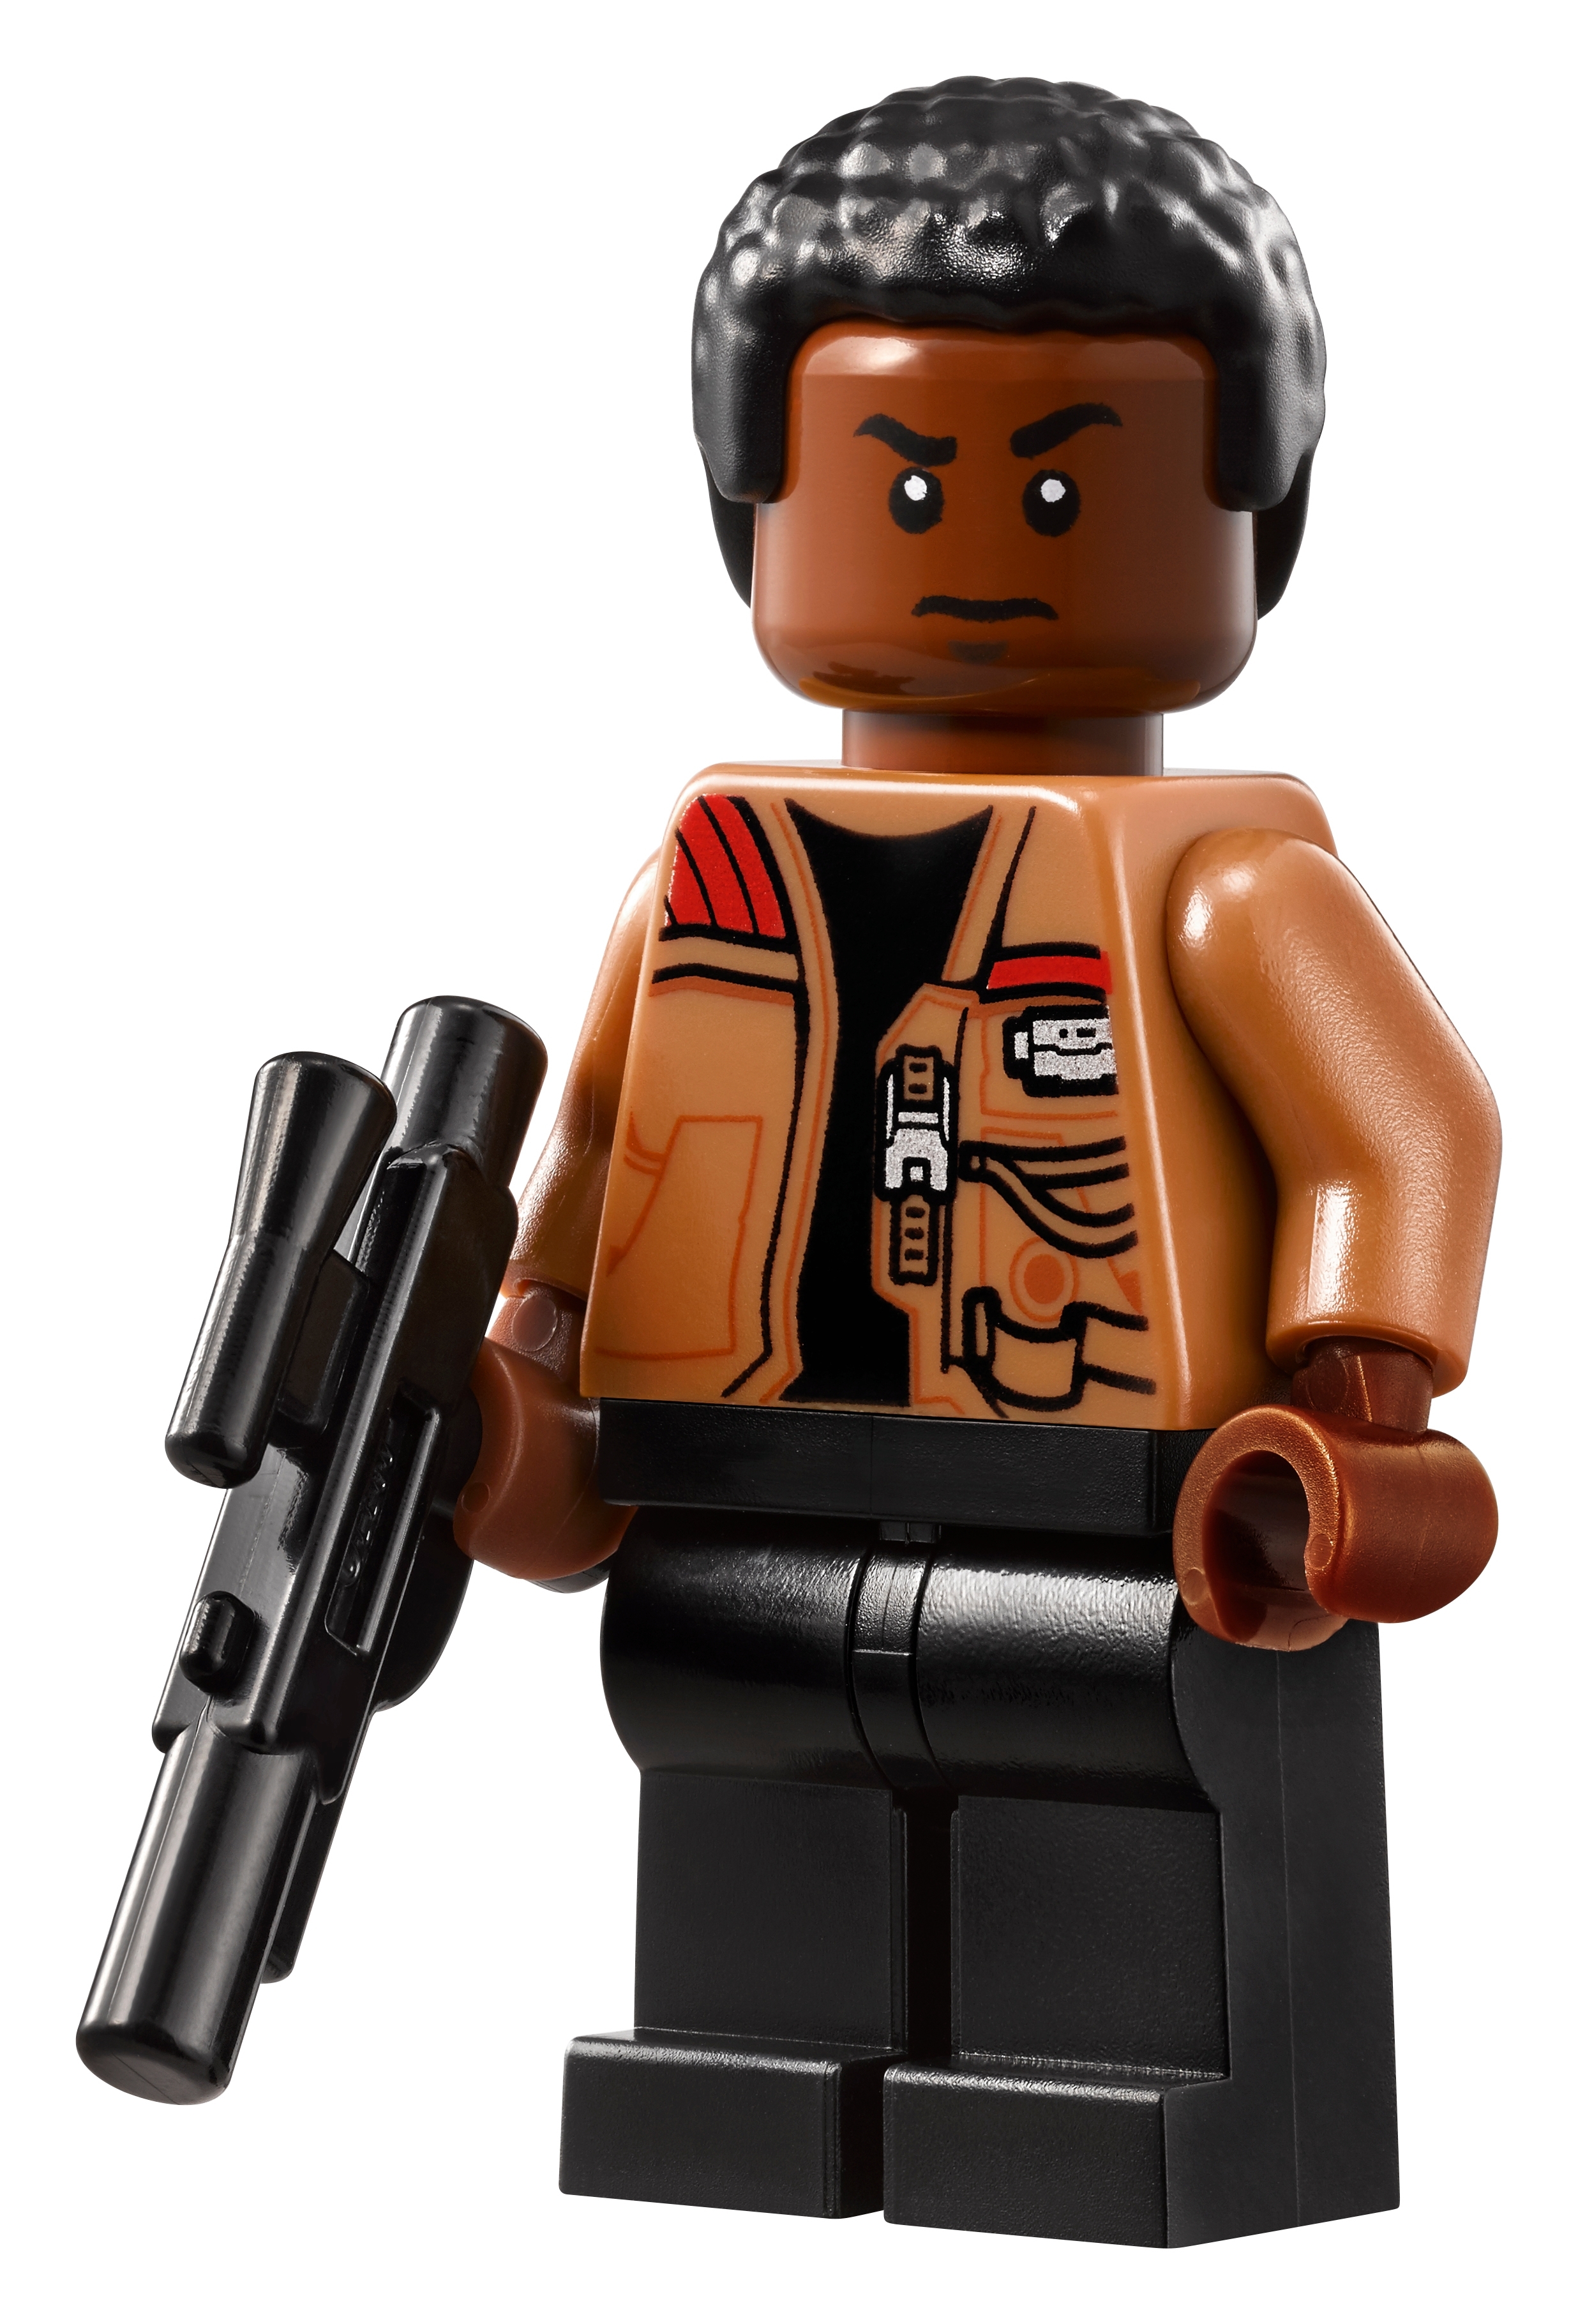 Lego Star Wars  Han Solo & Princess Leia Minifigures  Millennium Falcon 75192 